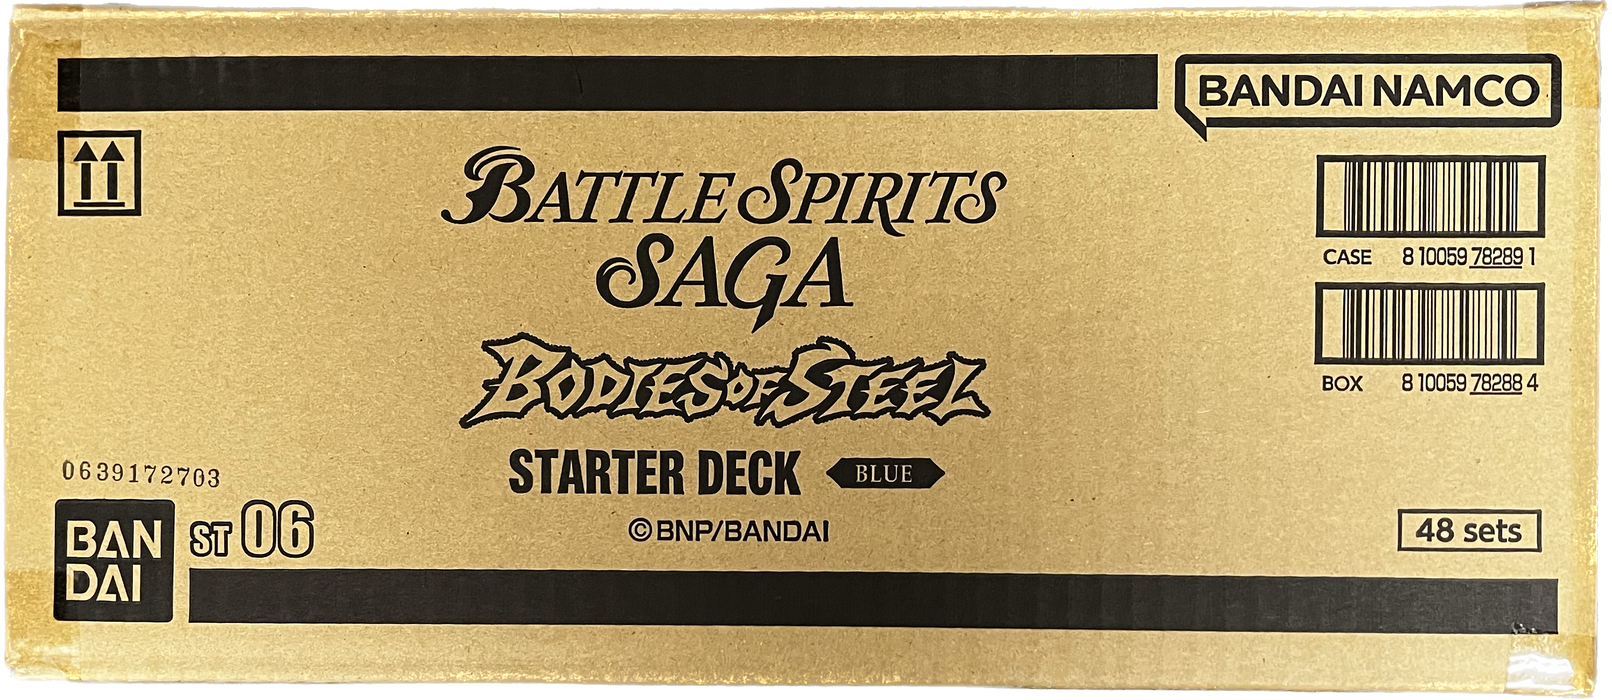 Battle Spirits Saga Starter Deck - Pastime Sports & Games